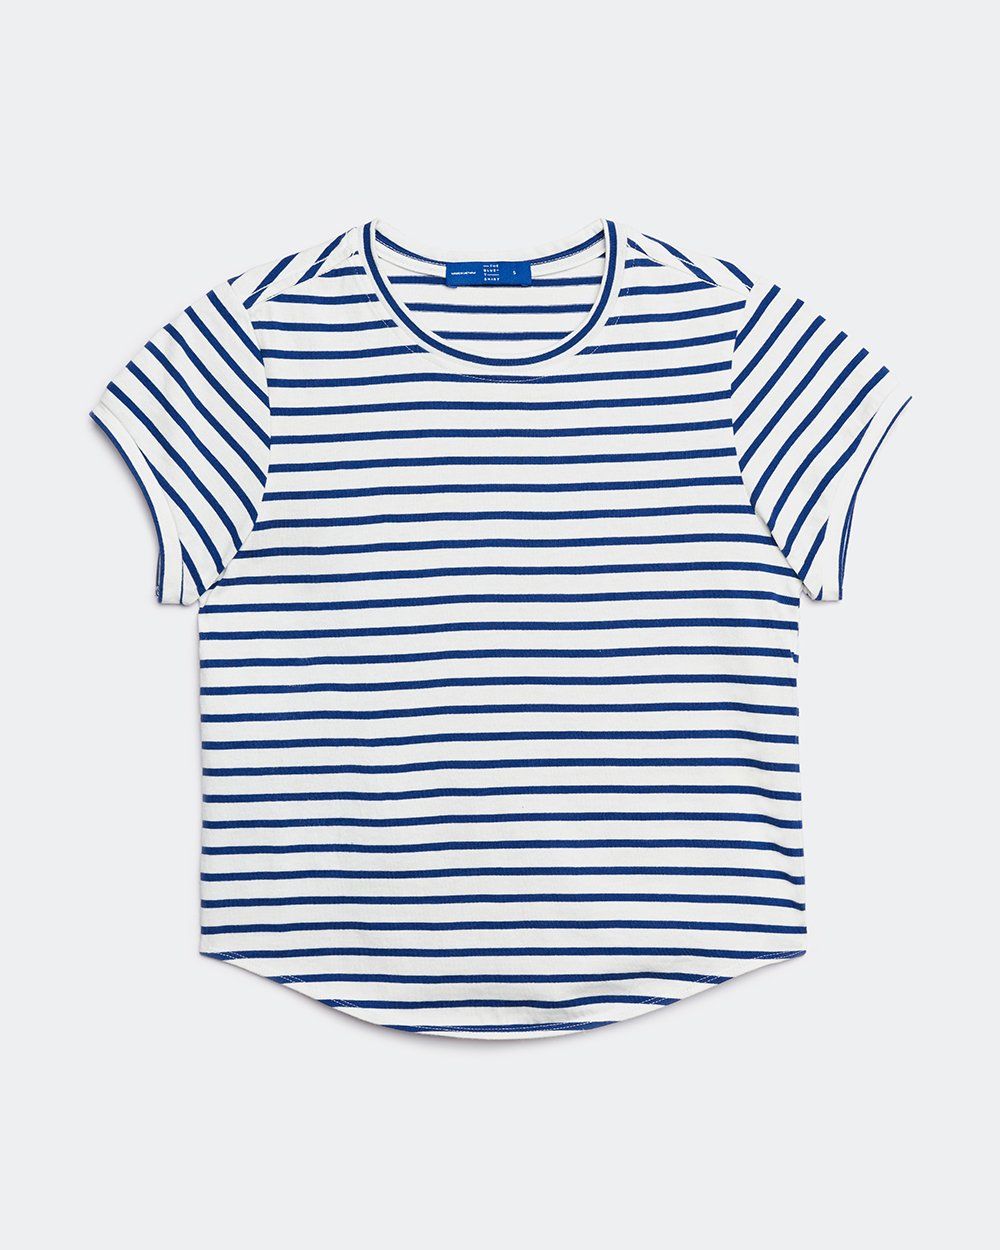 1990s T-shirt - Signature Blue Stripe